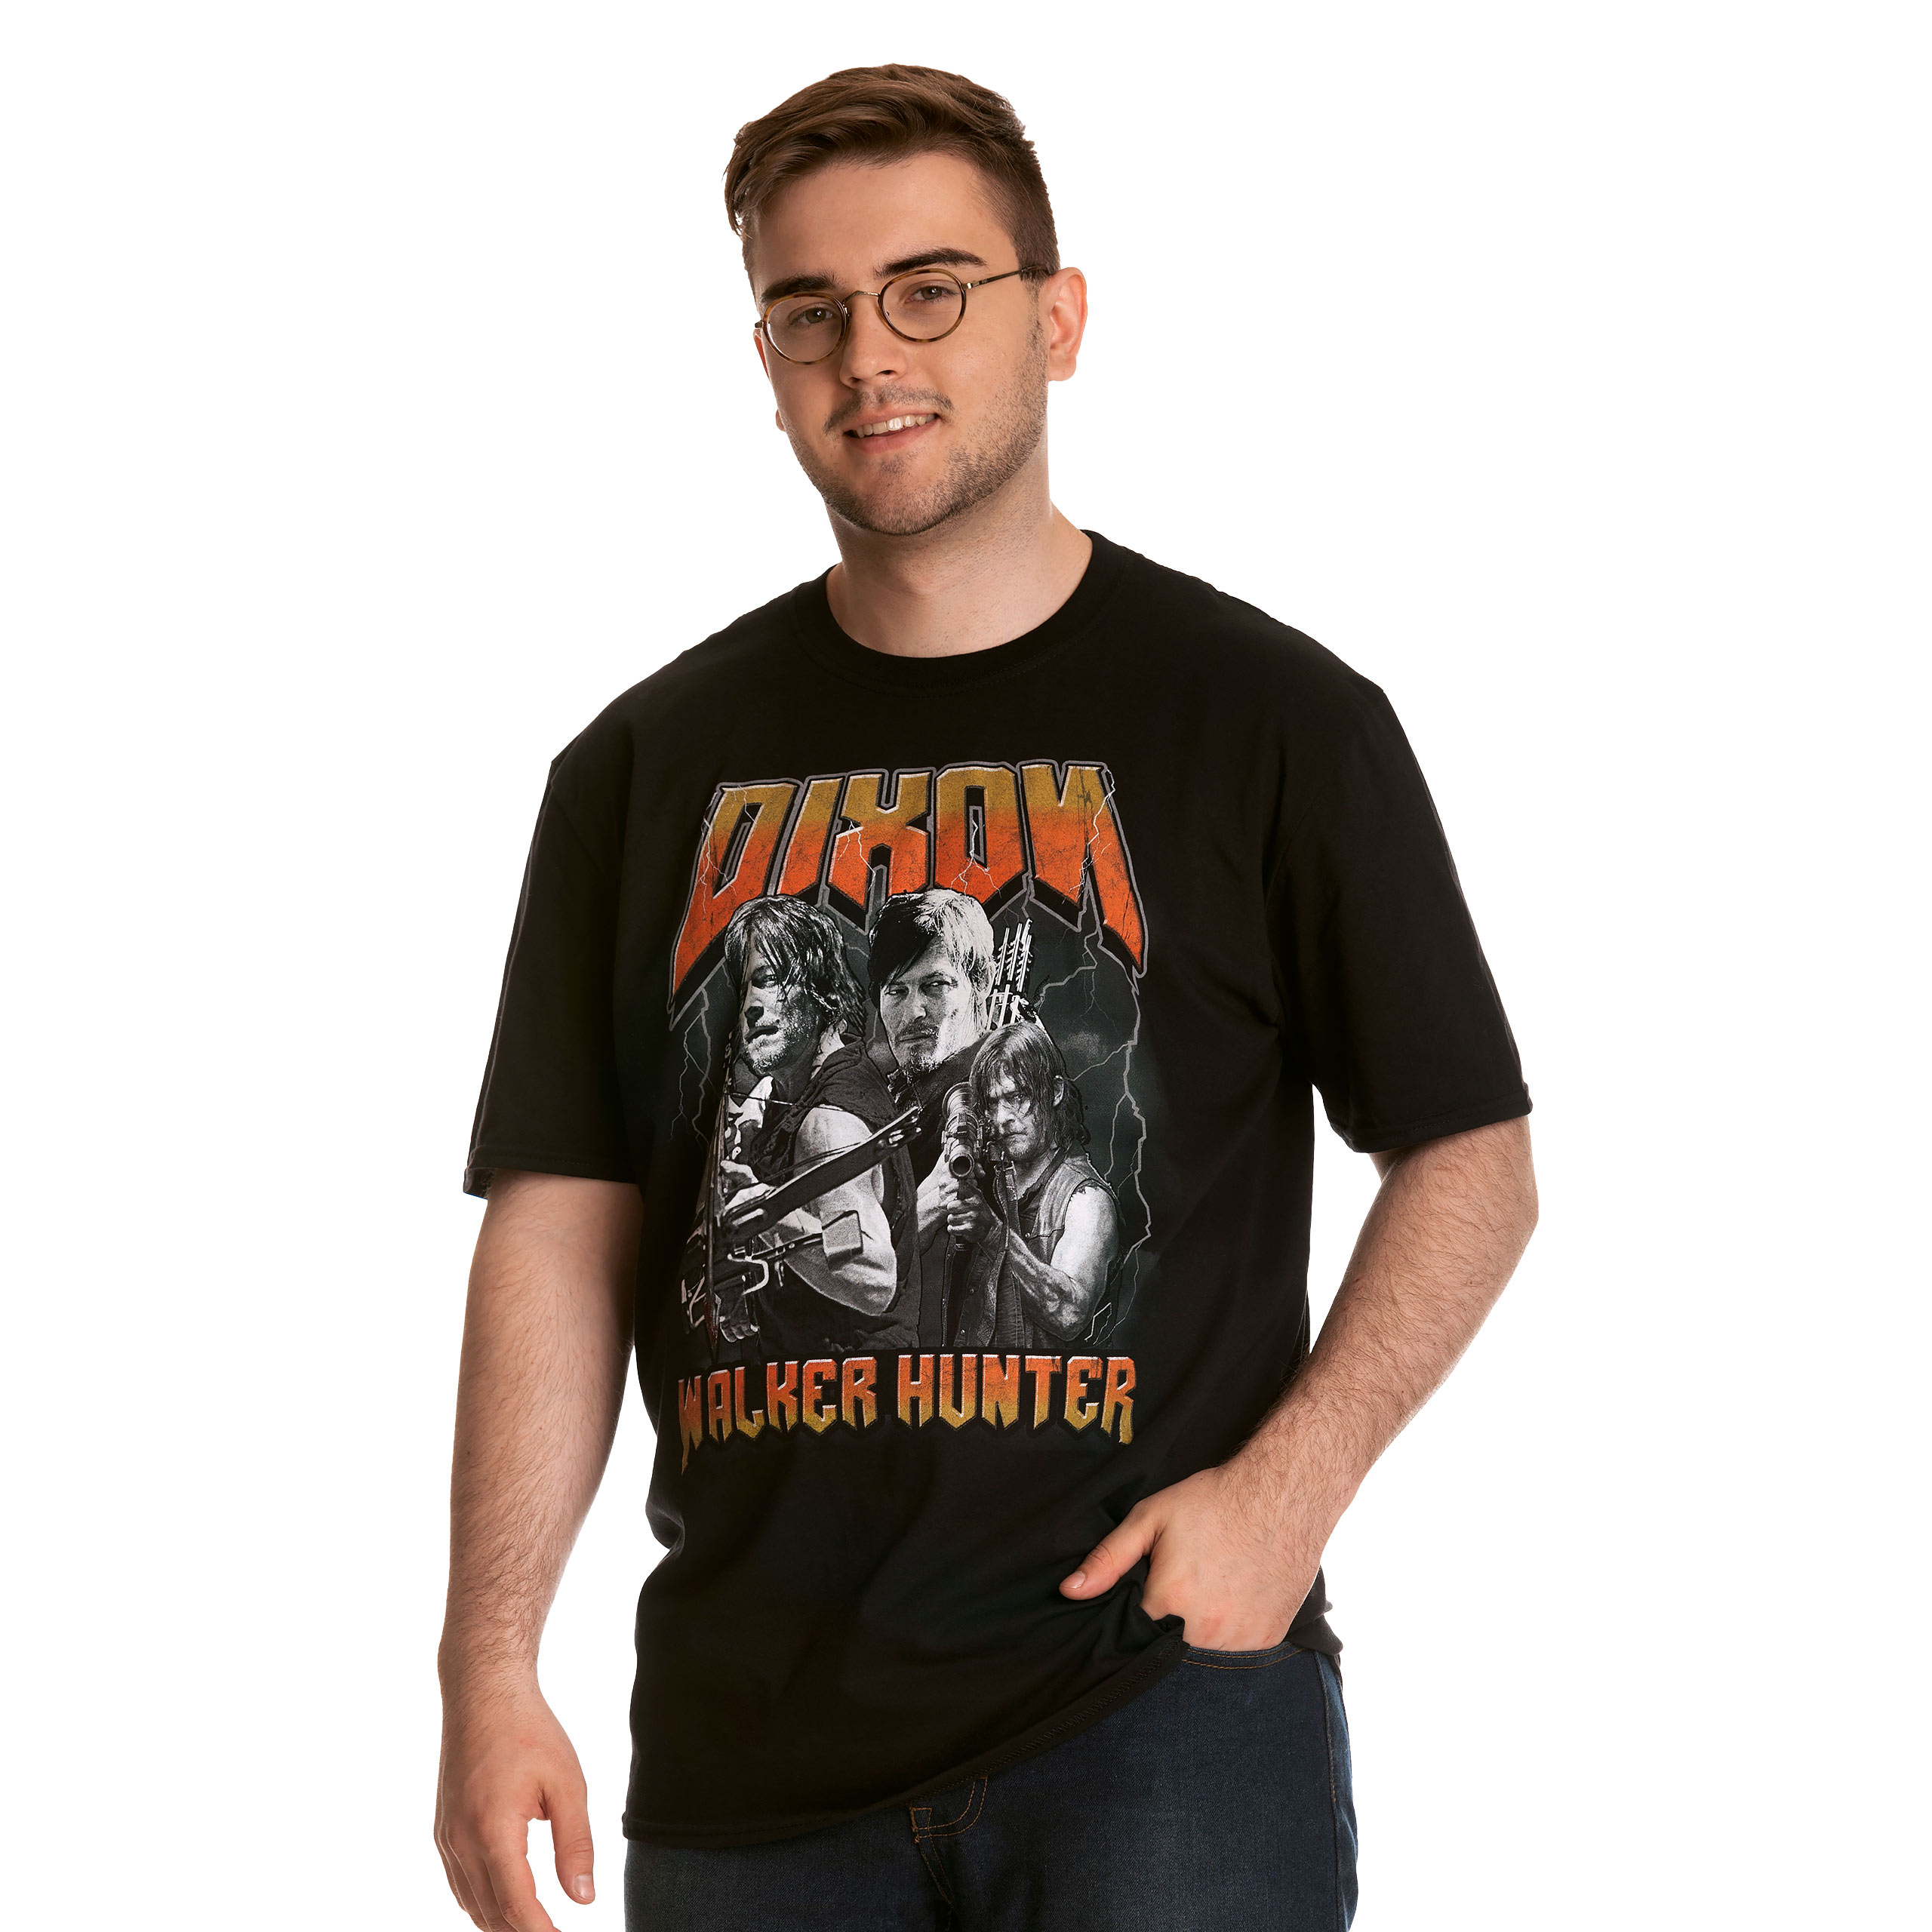 Walking Dead - T-shirt noir Dixon Walker Hunter